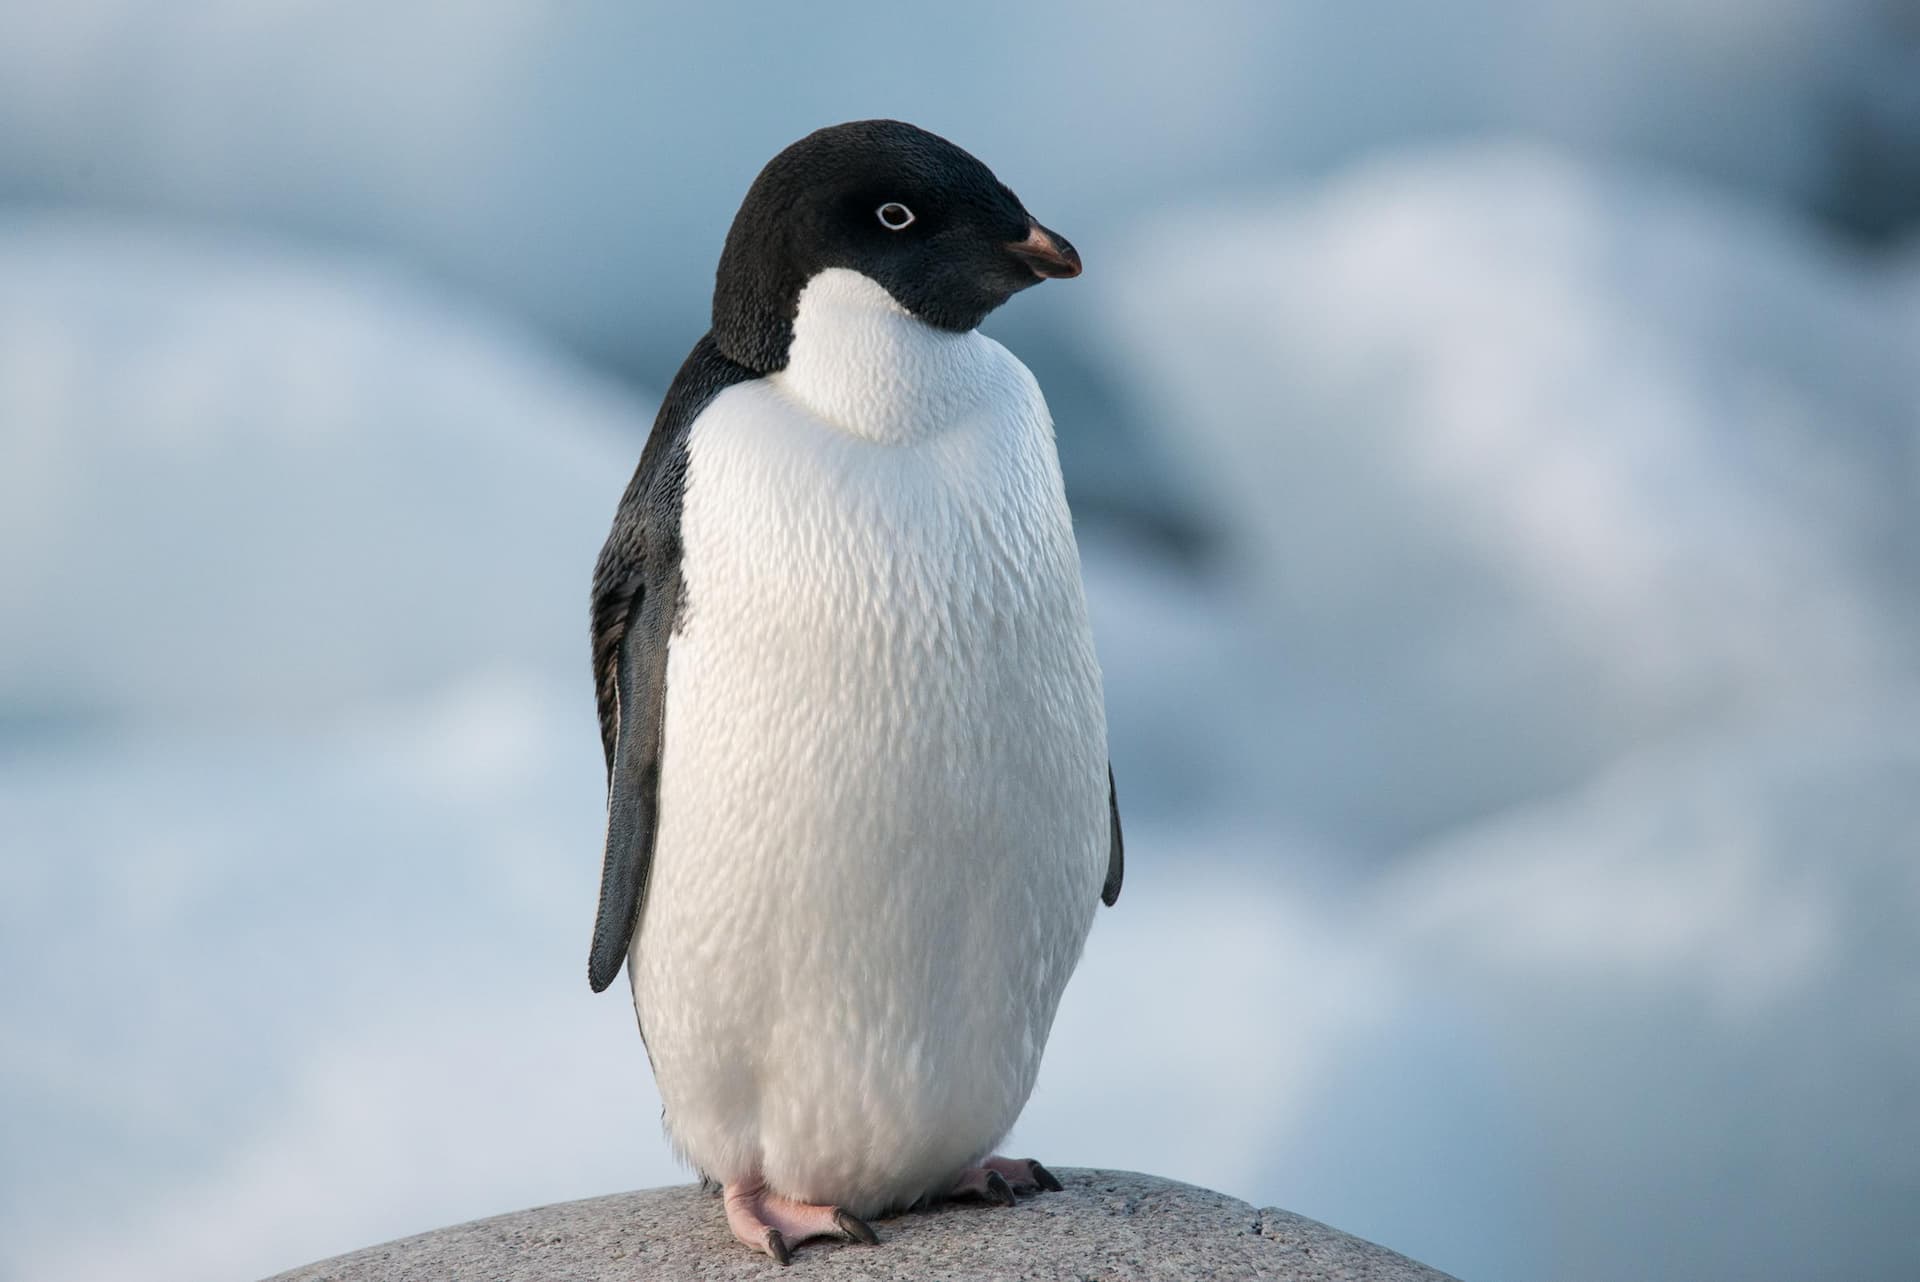 Penguin at Rotherabase, Antartica
